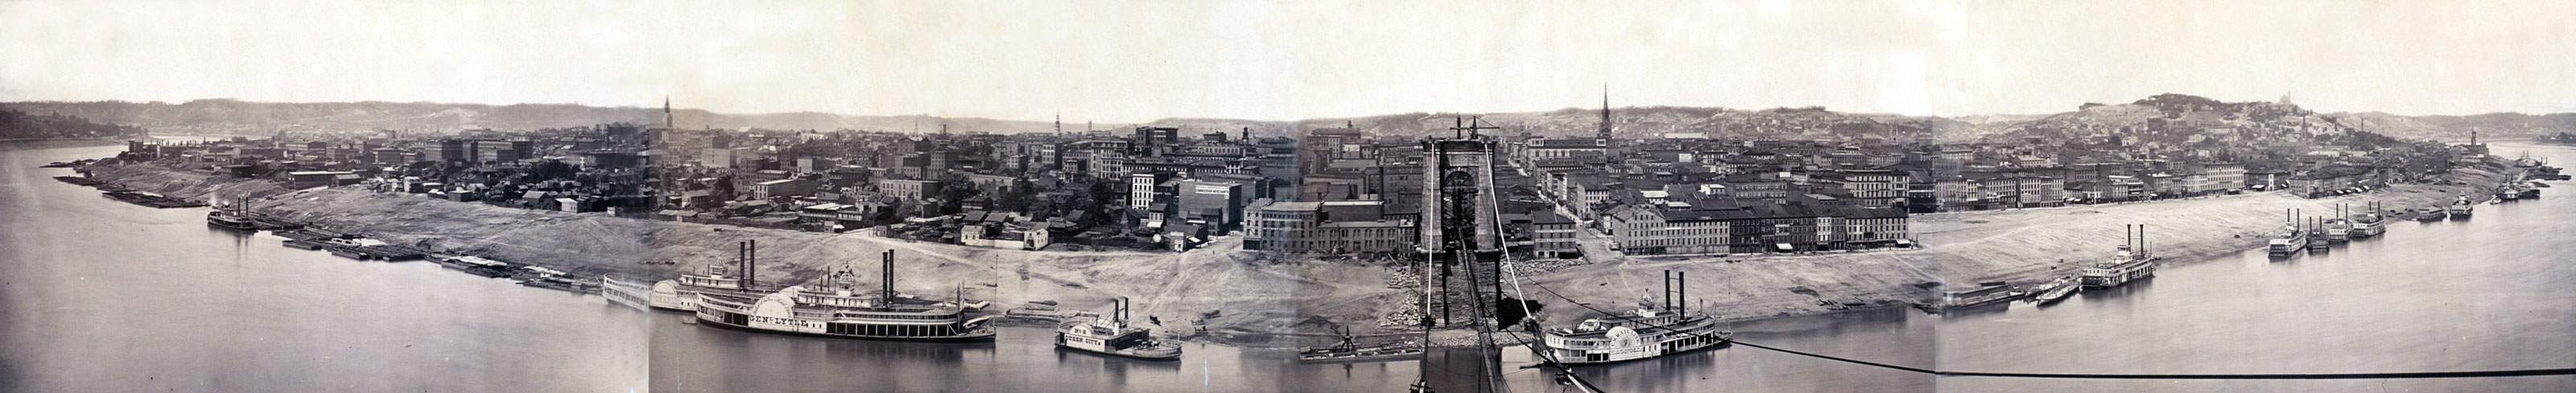 Cincinnati, Ohio, circa 1866, panoramic photograph, zoomable image